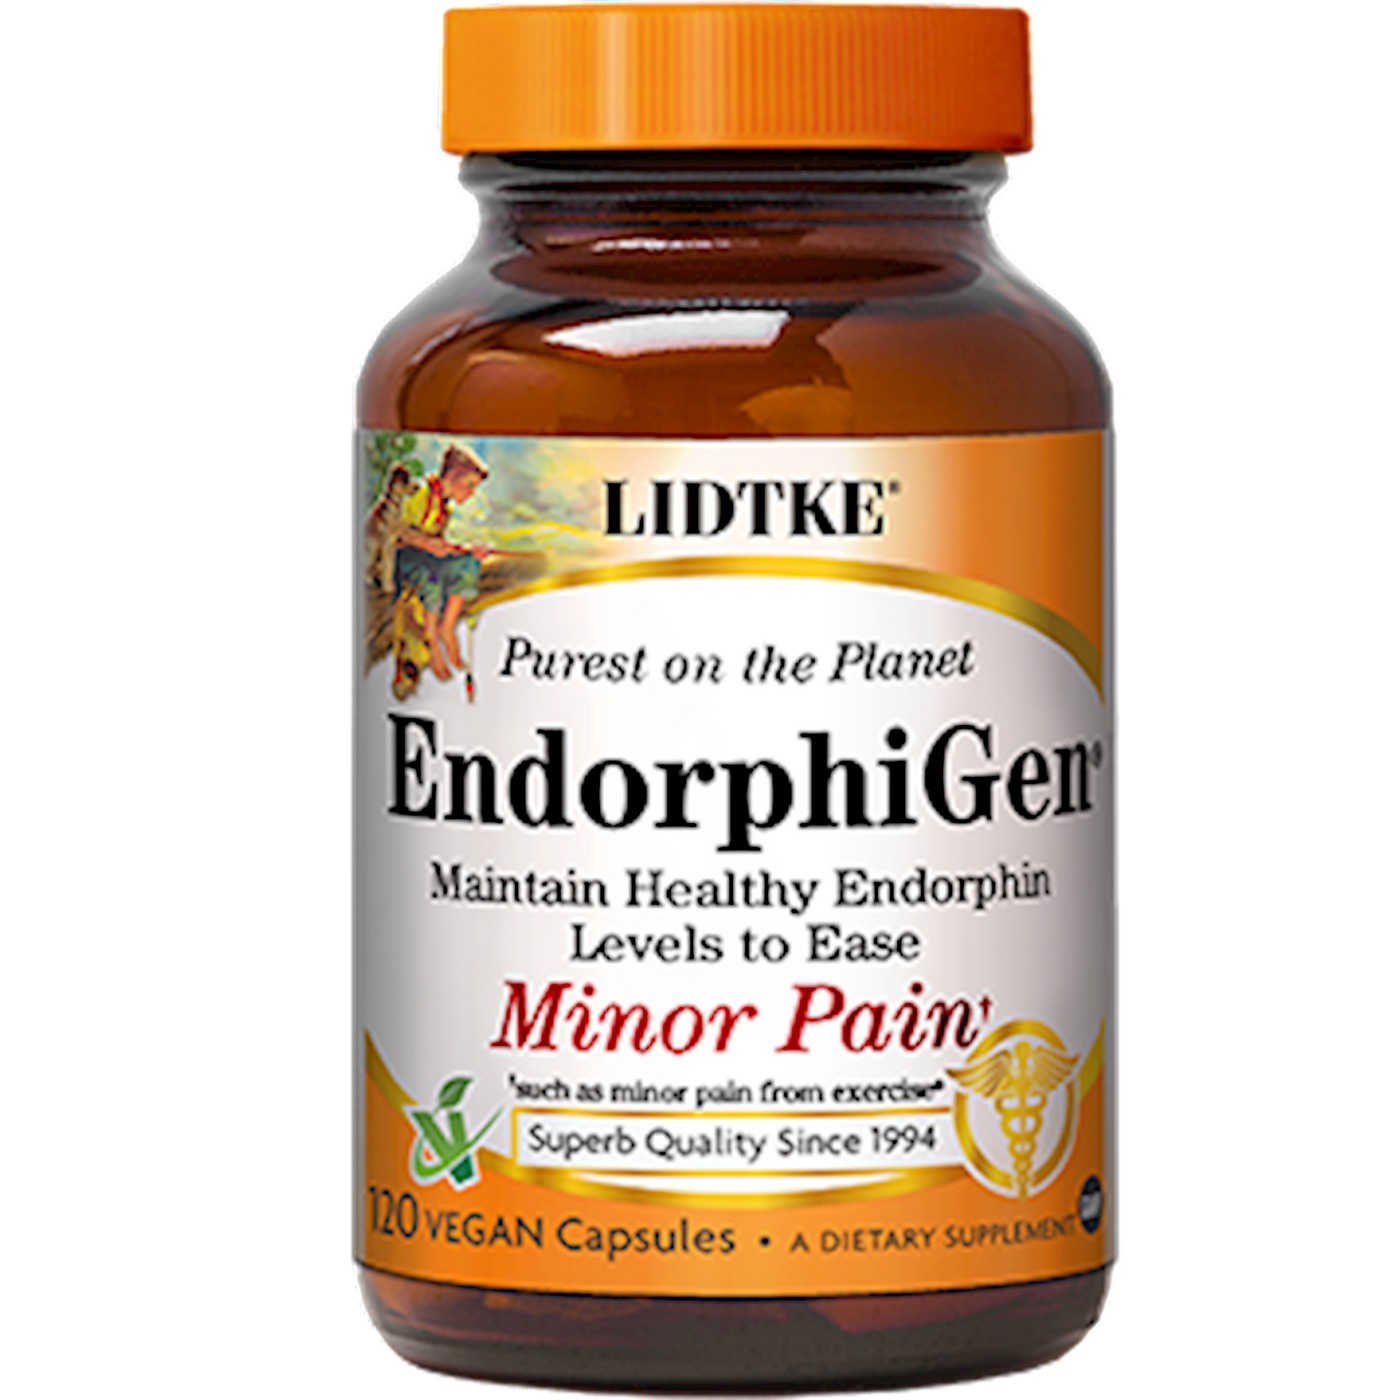 EndorphiGen 120 caps Curated Wellness